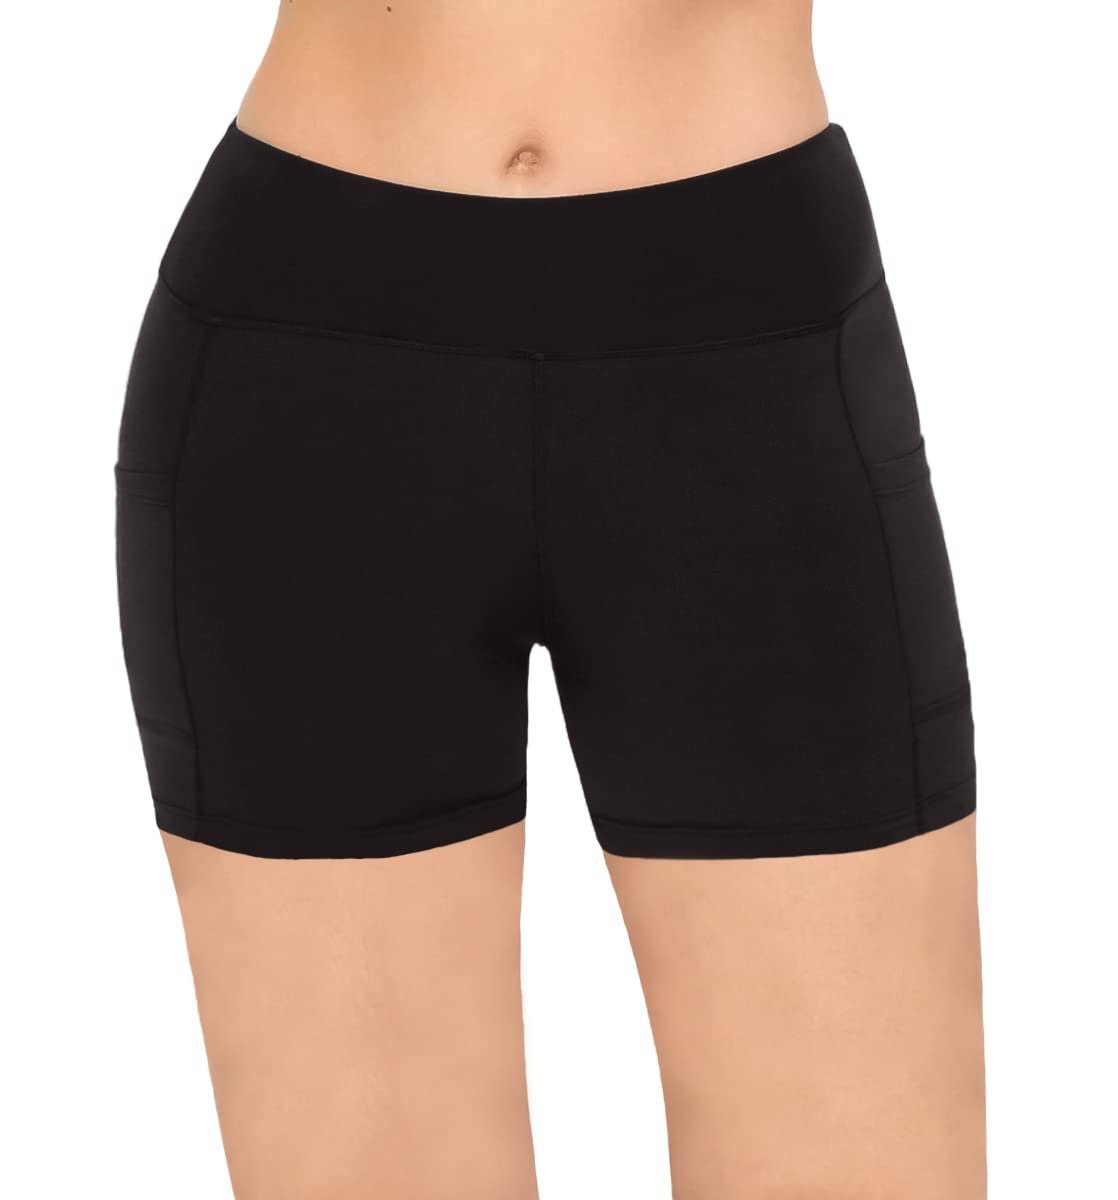 SATINA Biker Shorts for Women - High Waist Biker Shorts with Pockets - Yoga Shorts for Regular & Plus Size Women (5-Inch, Large, Black Shorts)